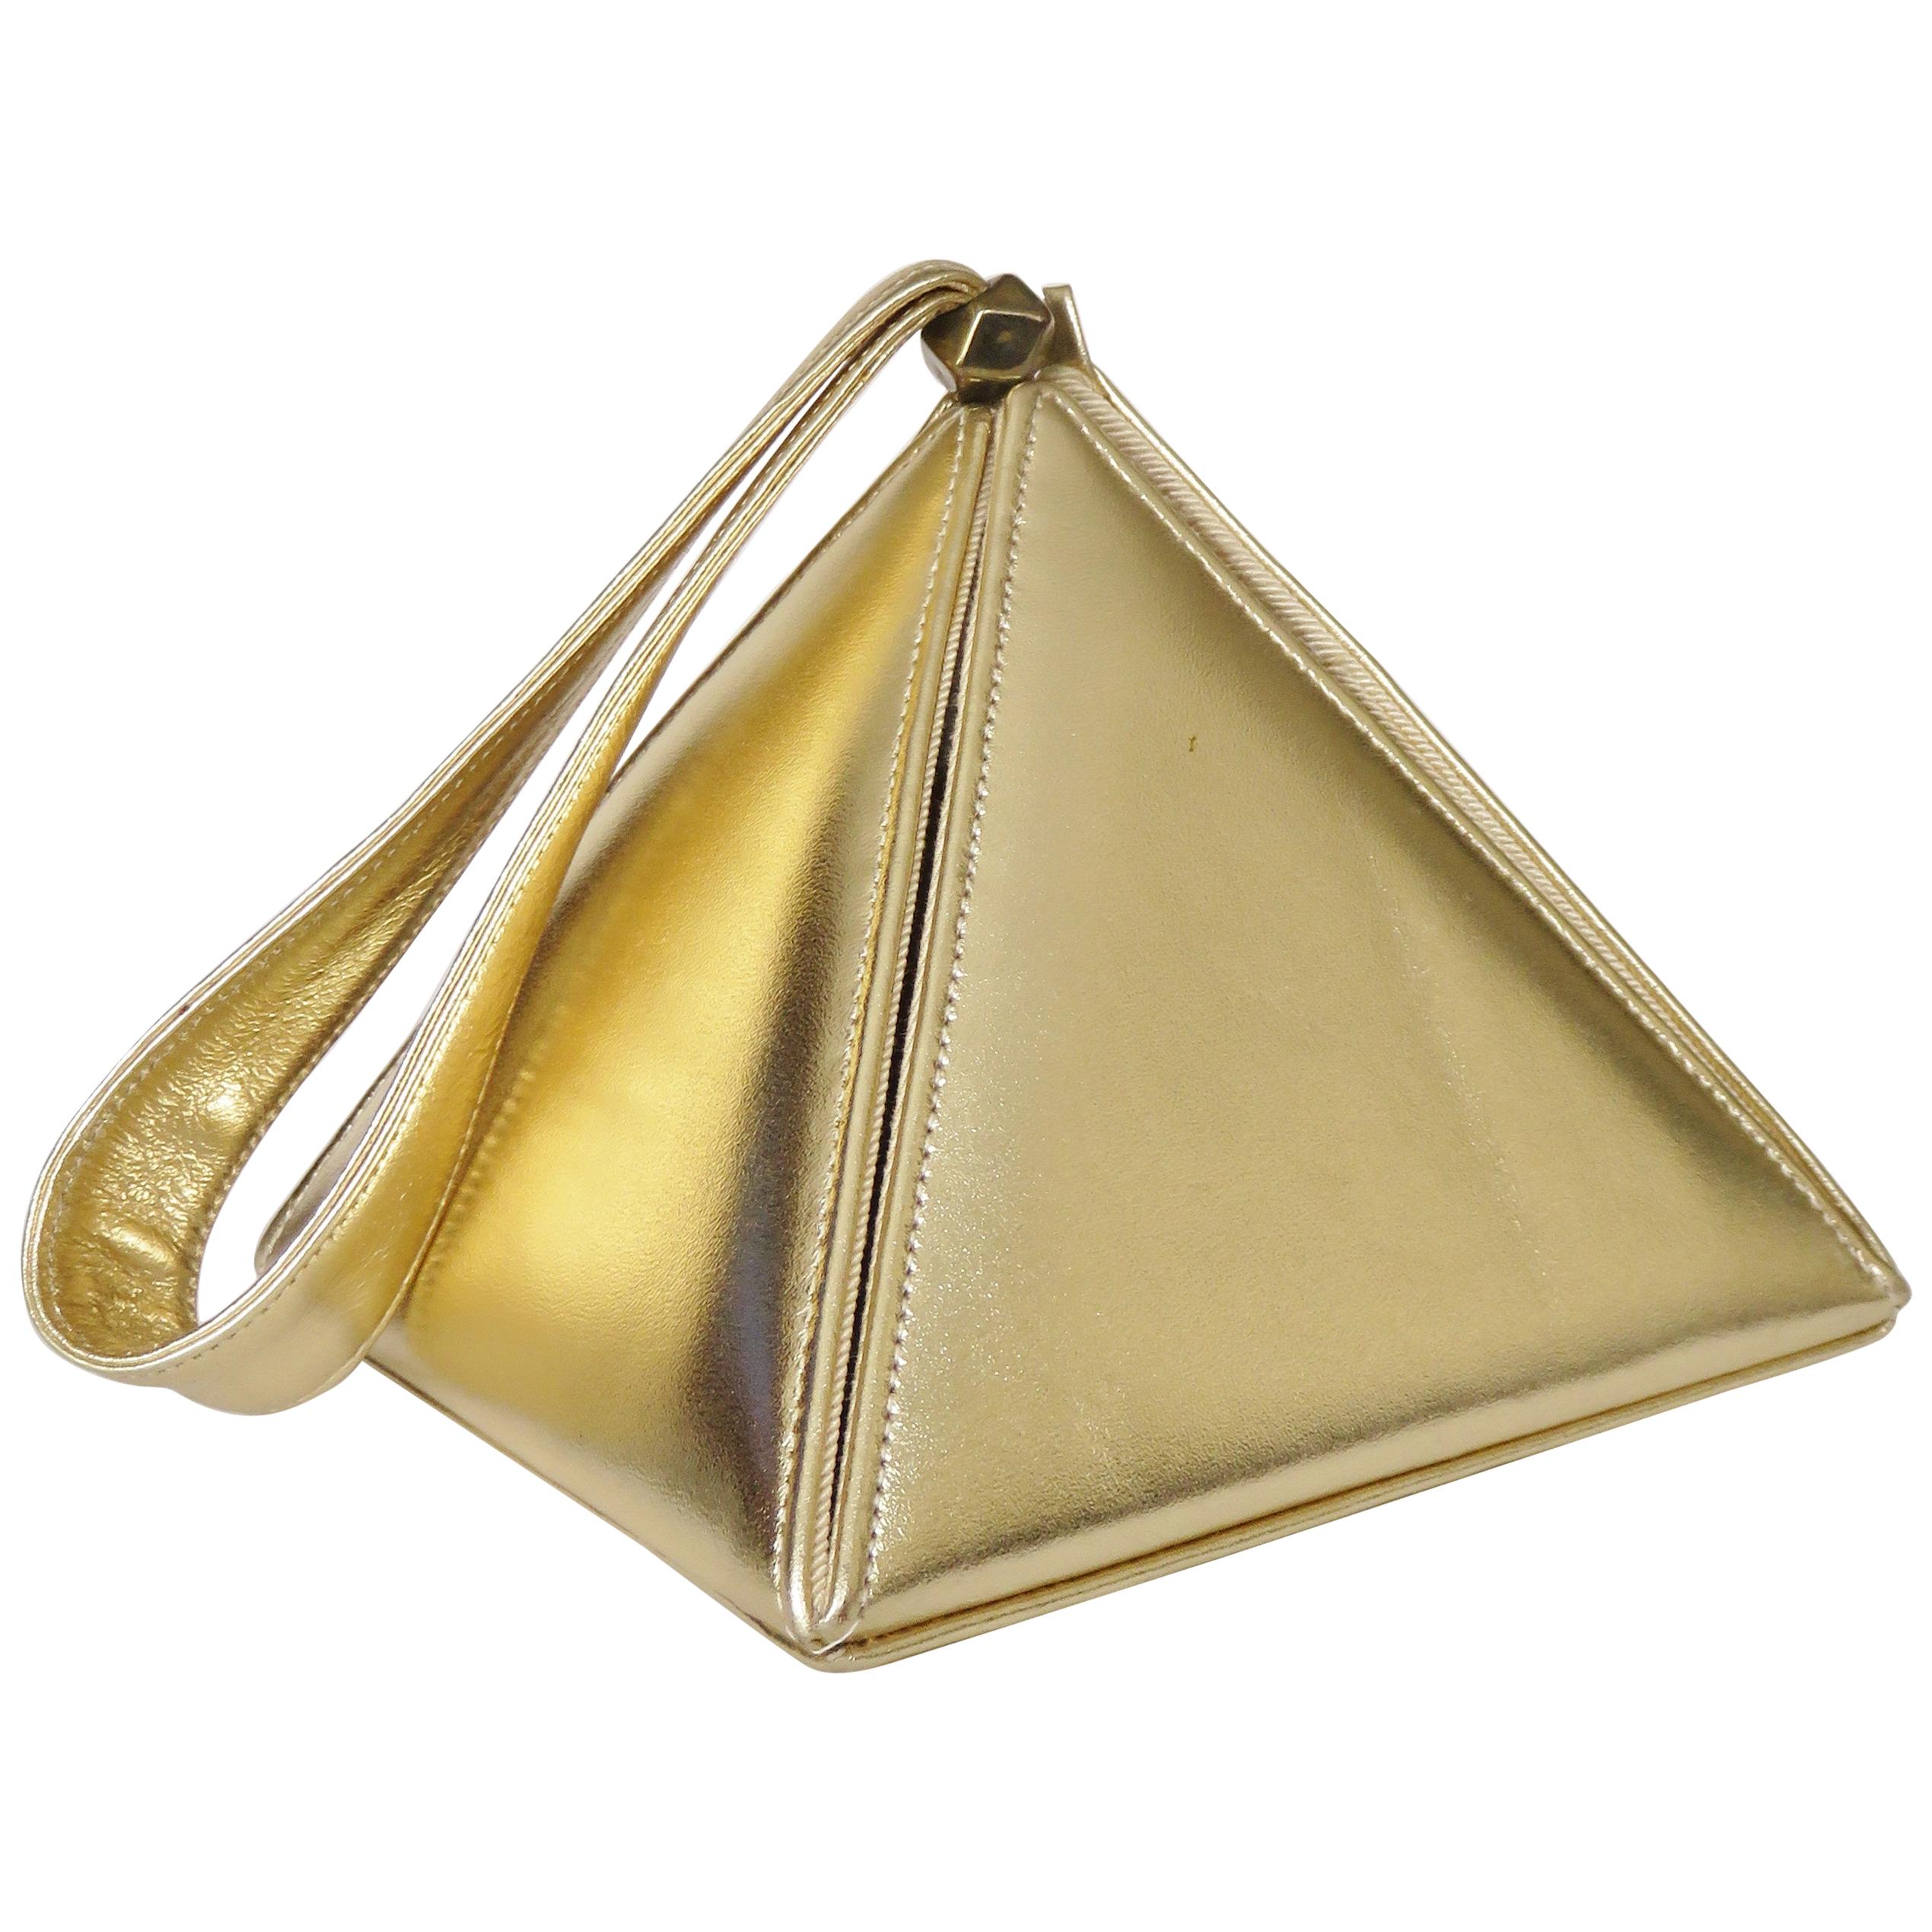 Carey Adina Gold Leather Pyramid New Bag 1990s